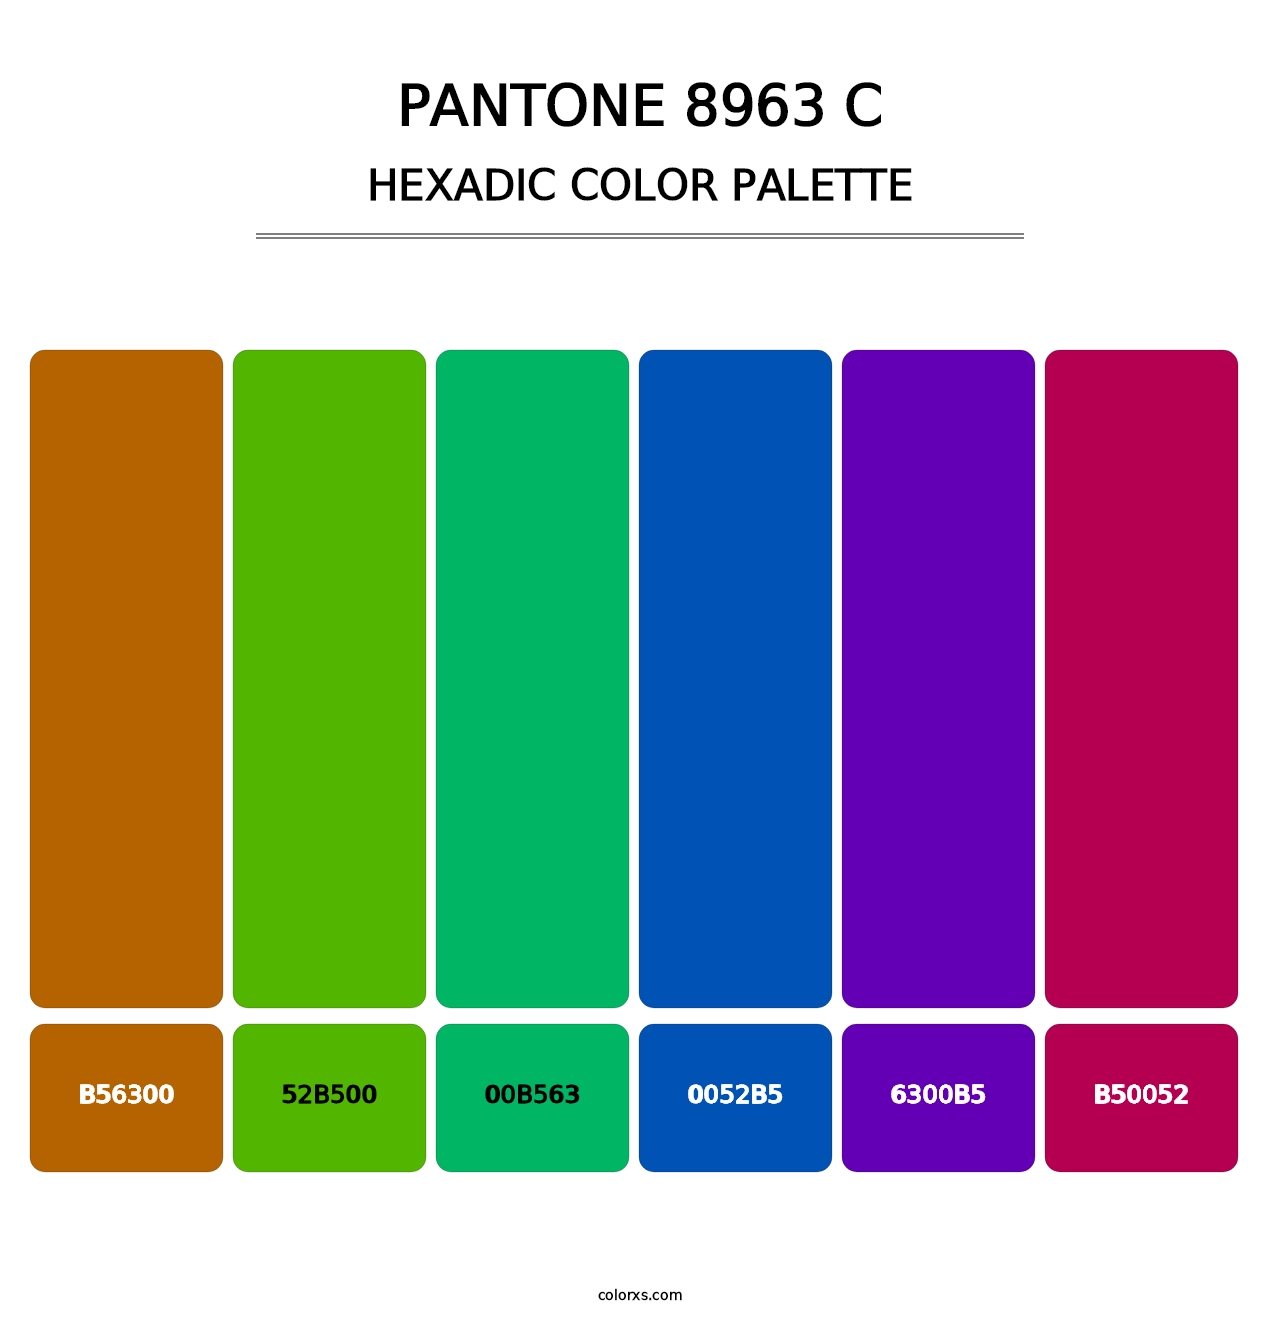 PANTONE 8963 C - Hexadic Color Palette